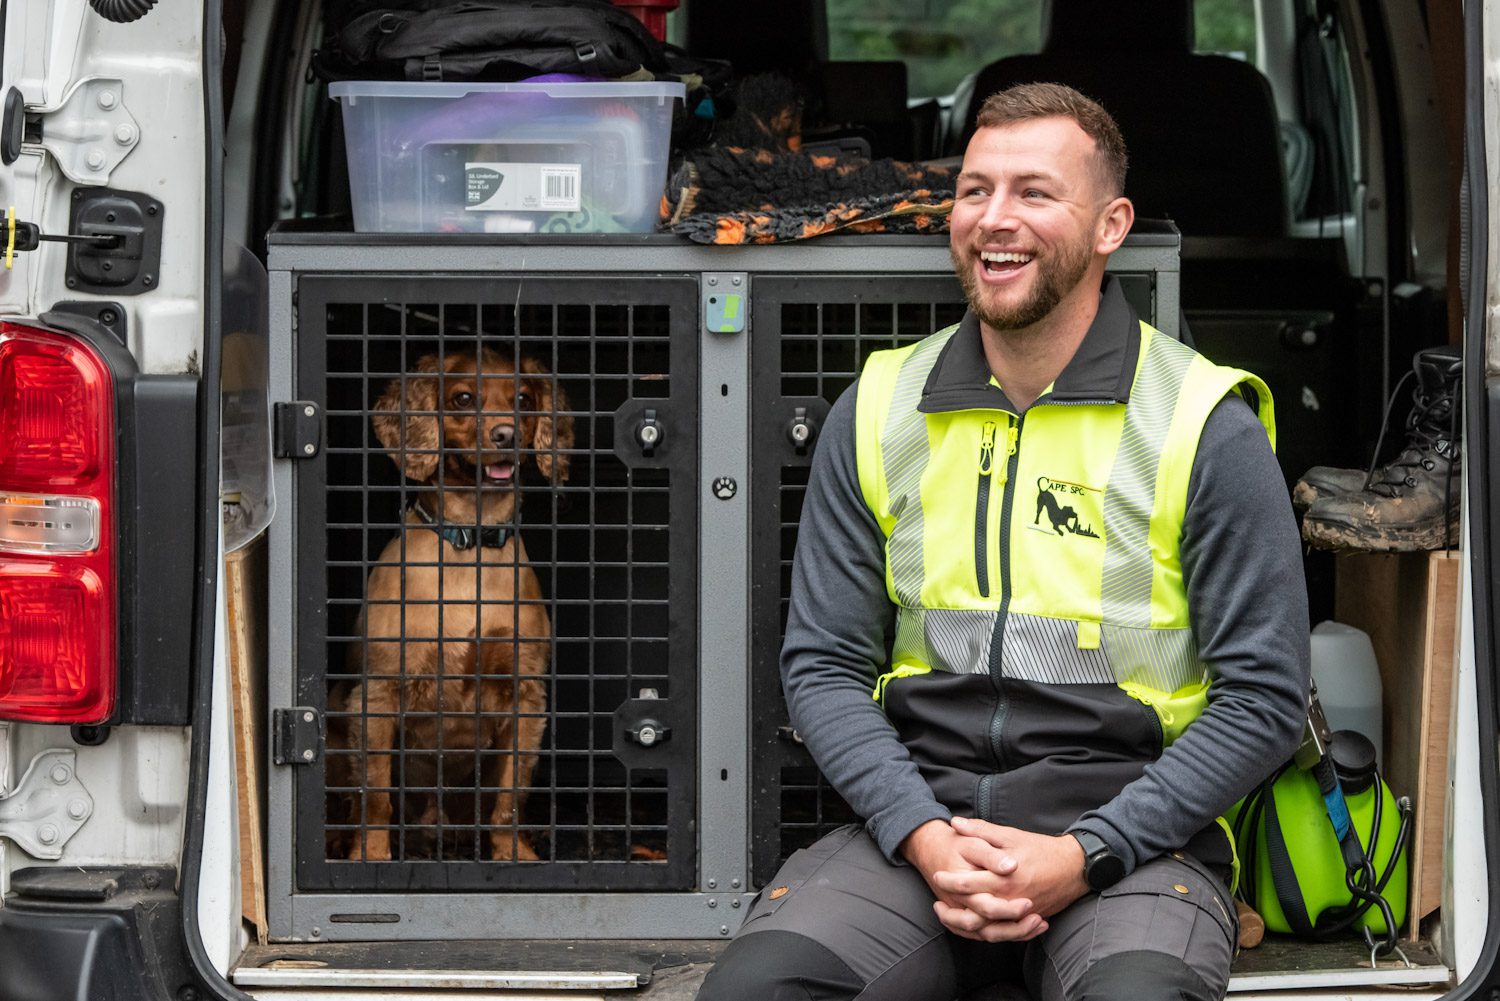 detection dog in van with handler sitting next to him